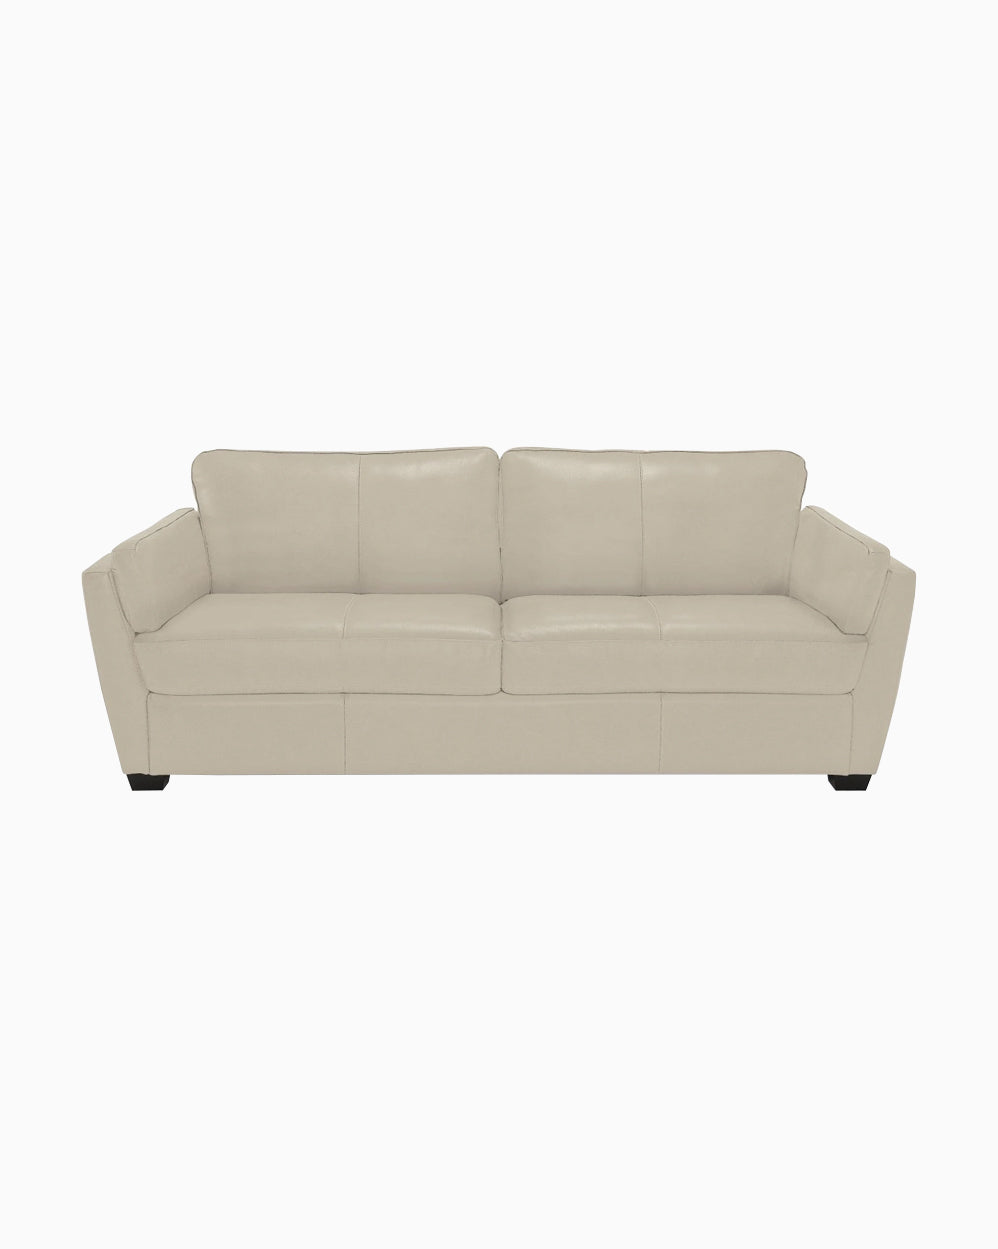 Burman Leather Sofa